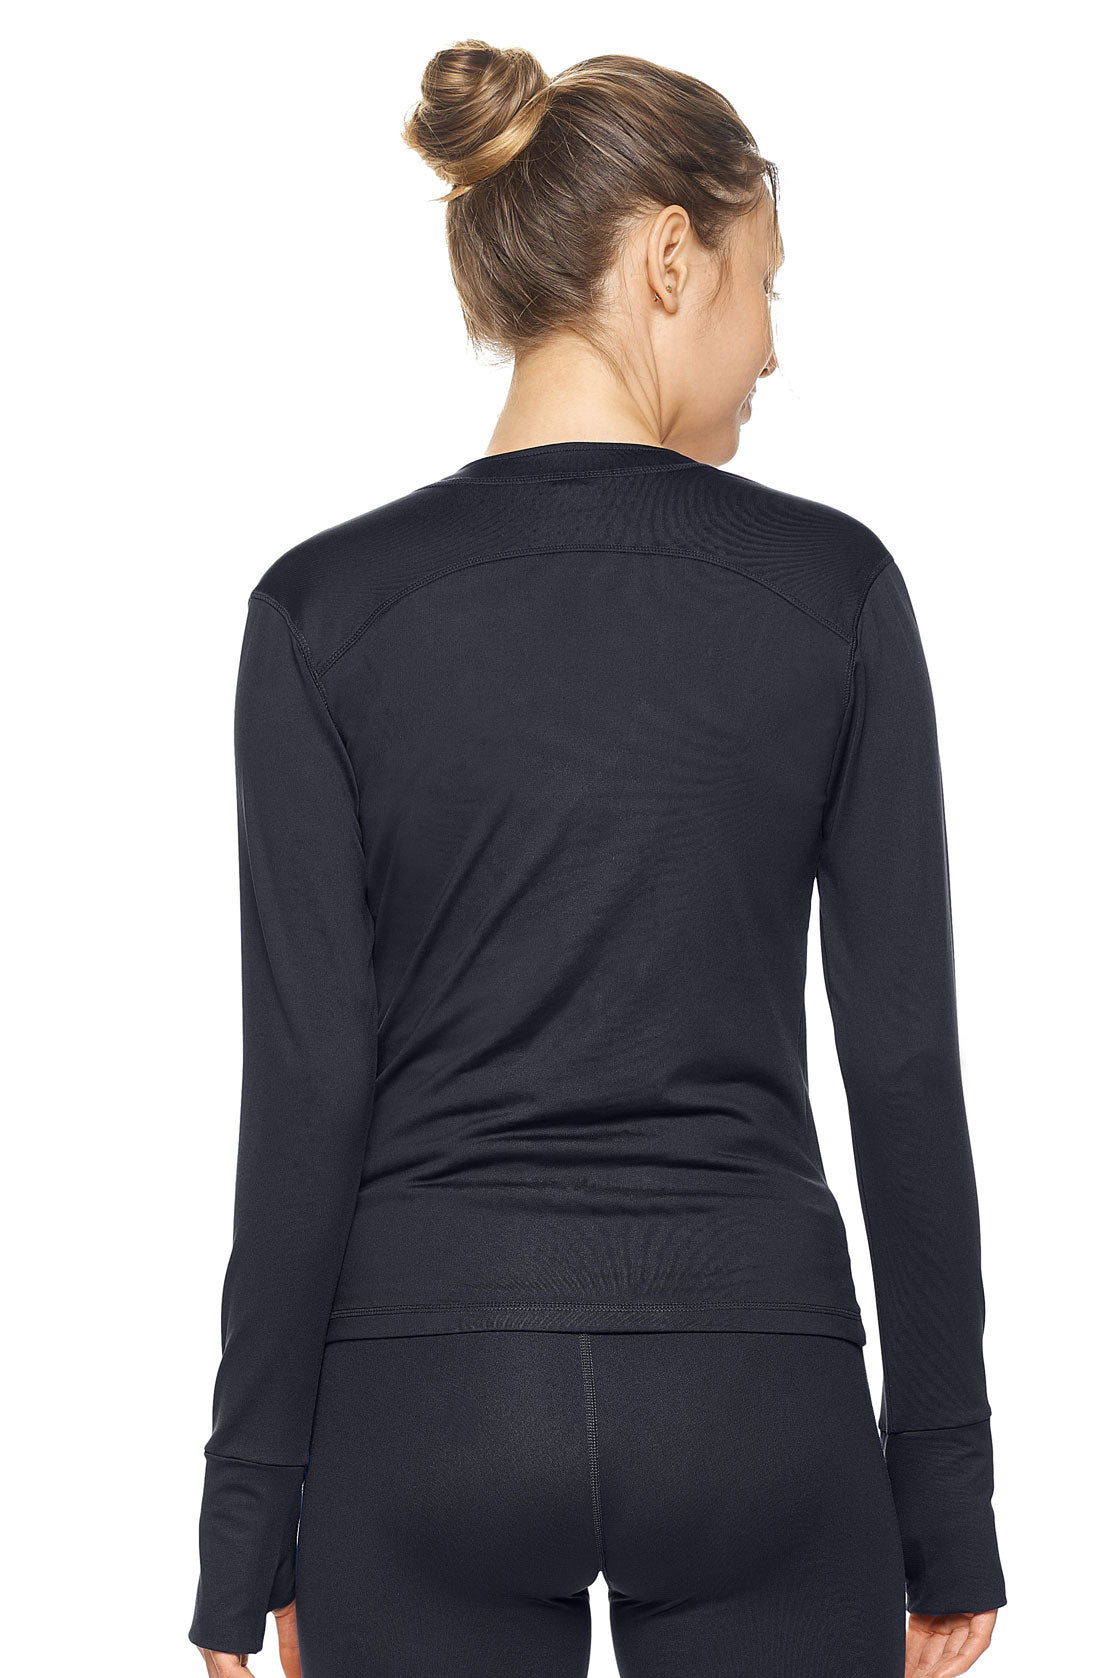 Expert Brand Wholesale Women's Airstretch Moto Jacket in Black 4#black